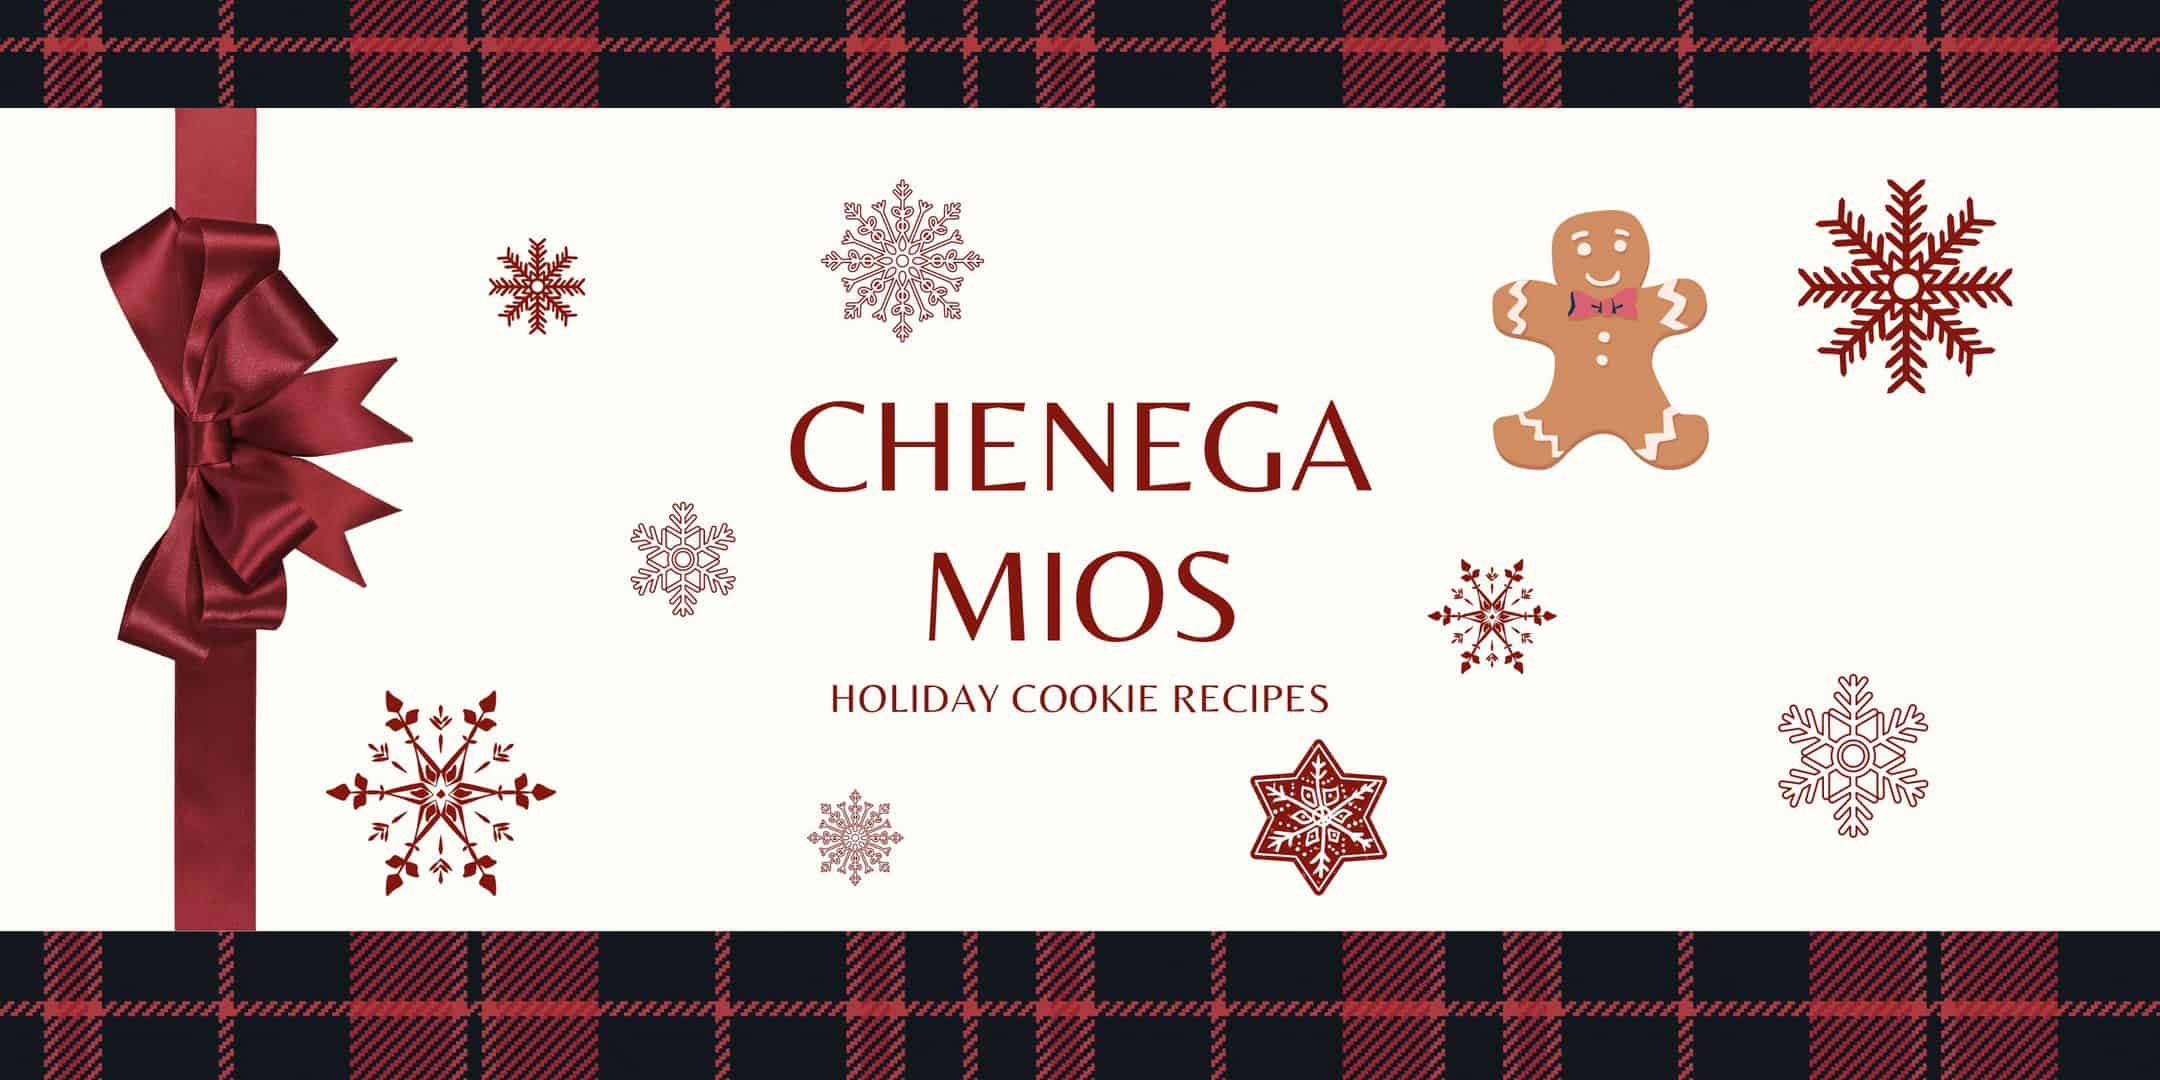 Chenega MIOS Holiday Cookie Recipes